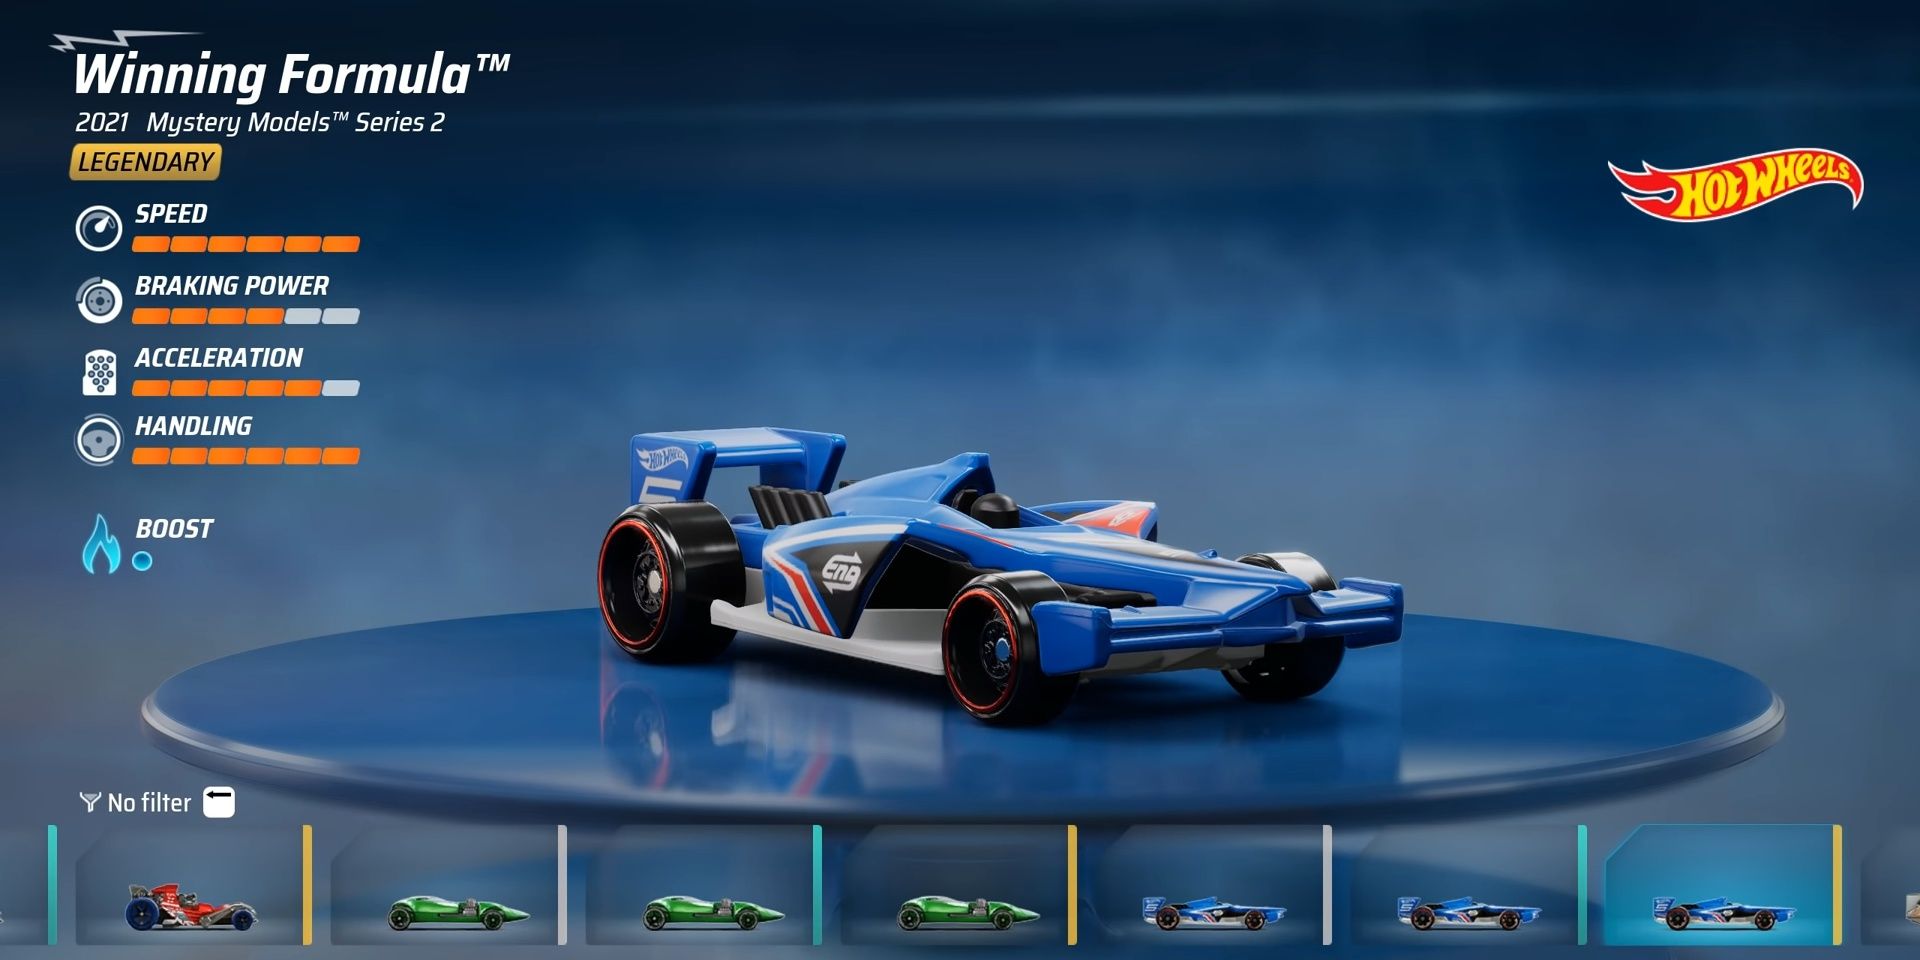 F1 2023 (PS5) - Exotique